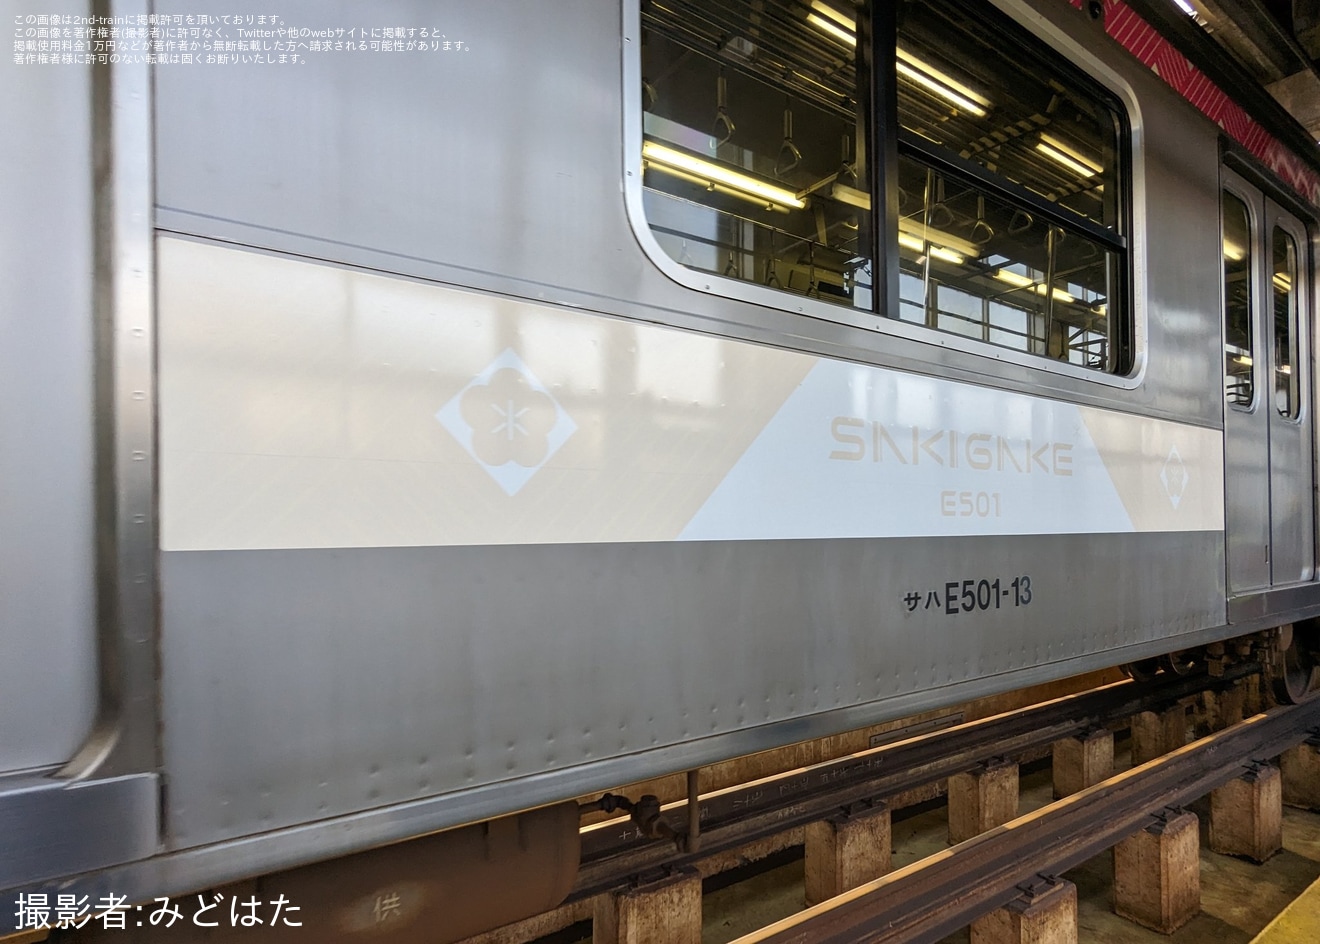 【JR東】E501系K754編成がイベント専用車両『E501 SAKIGAKE(さきがけ)』に改造中の拡大写真